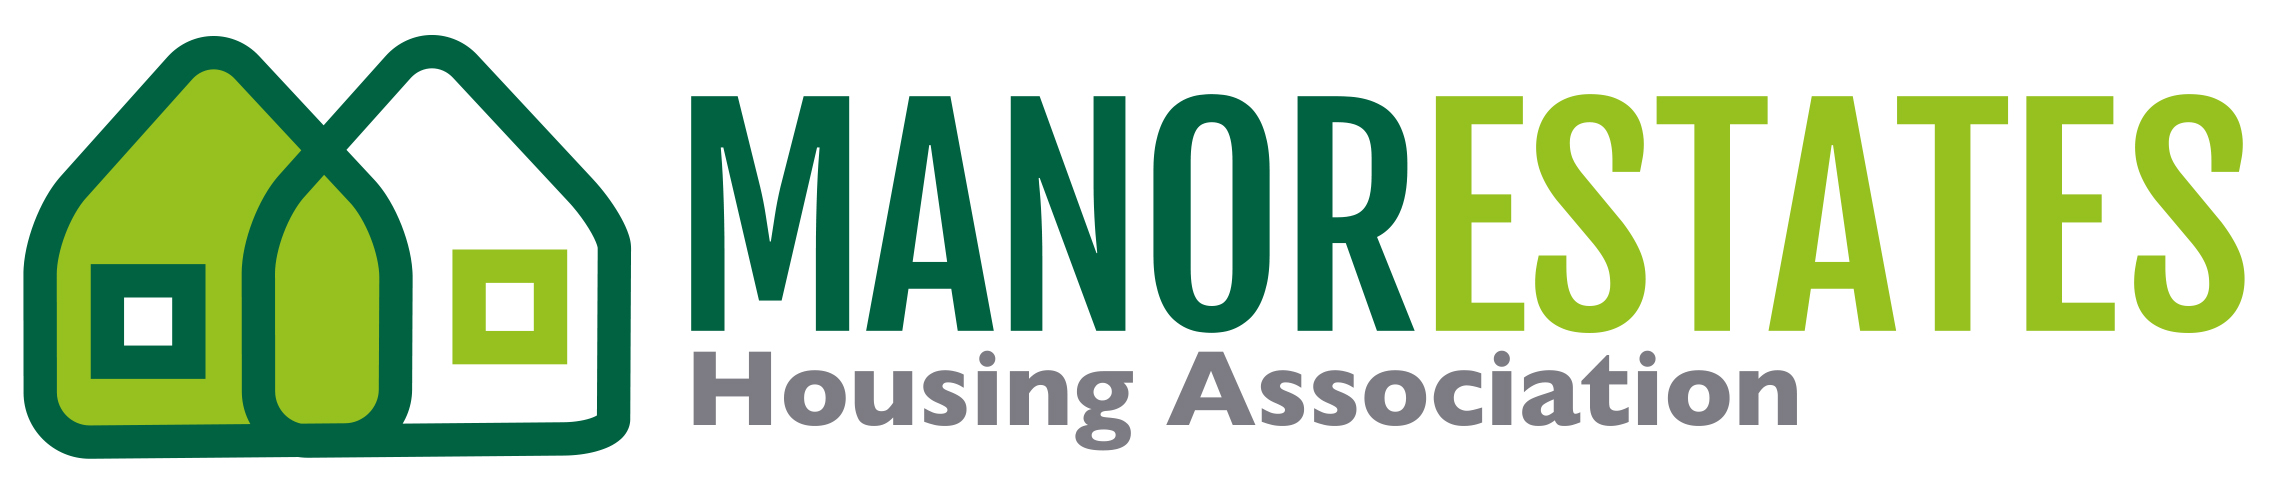 Manor Estates Housing Association Logo